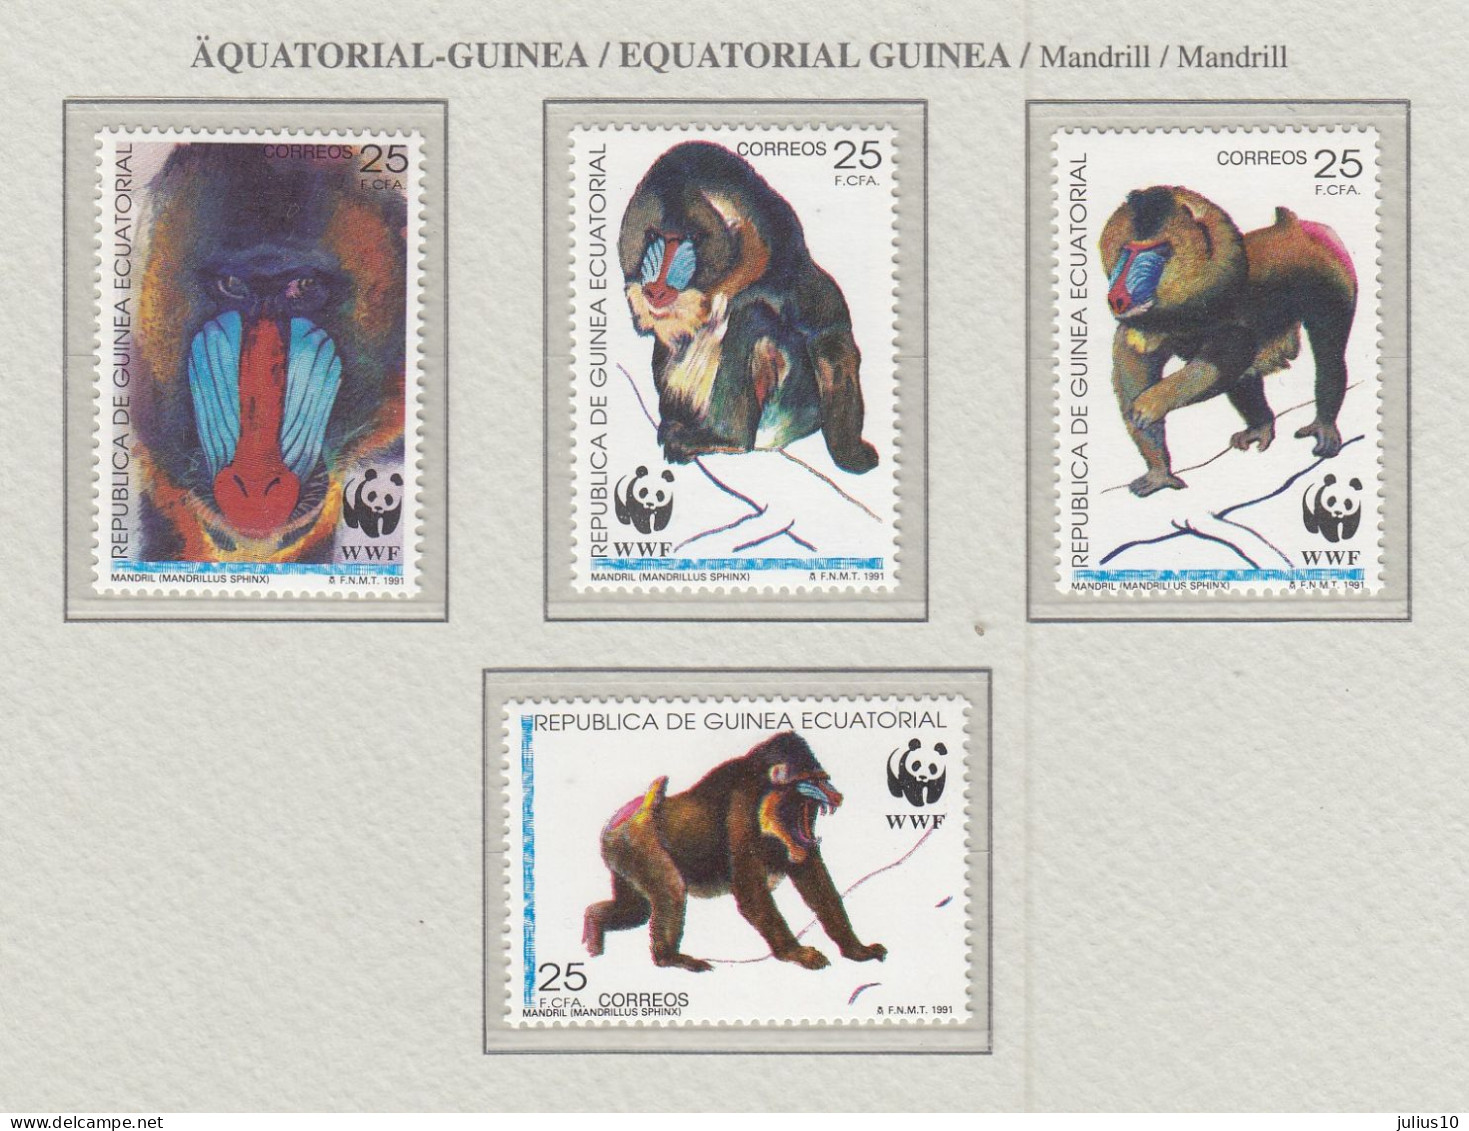 EQUATORIAL GUINEA 1991 WWF Monkeys Mandrill MNH(**) Fauna 797 - Monkeys